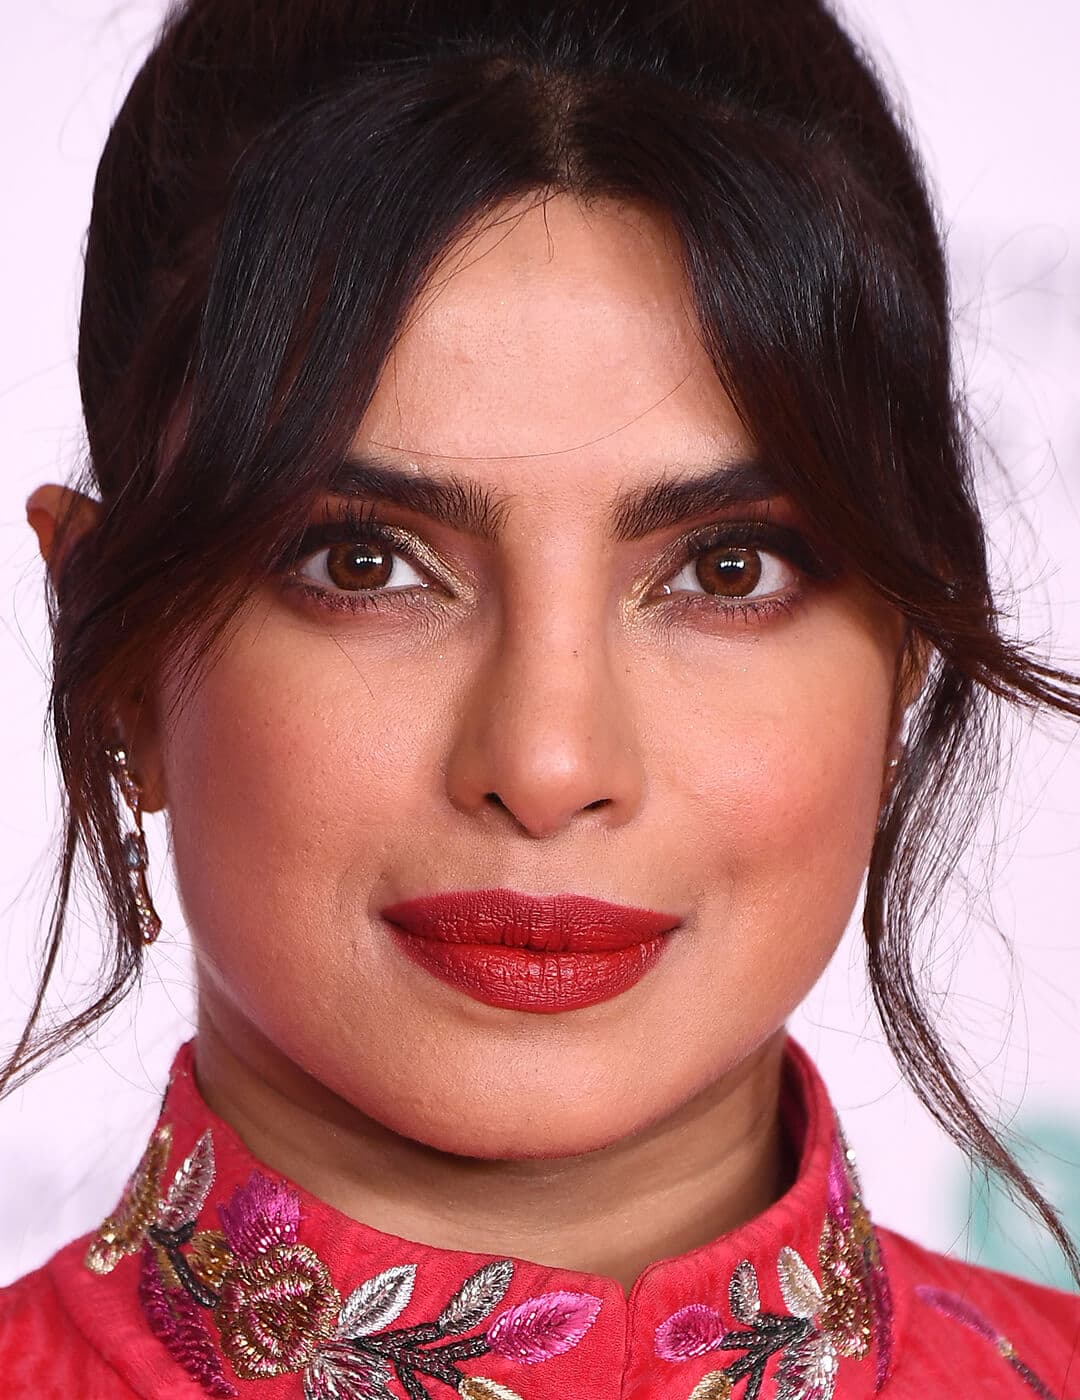 A photo of  Priyanka Chopra wearing red lipstick